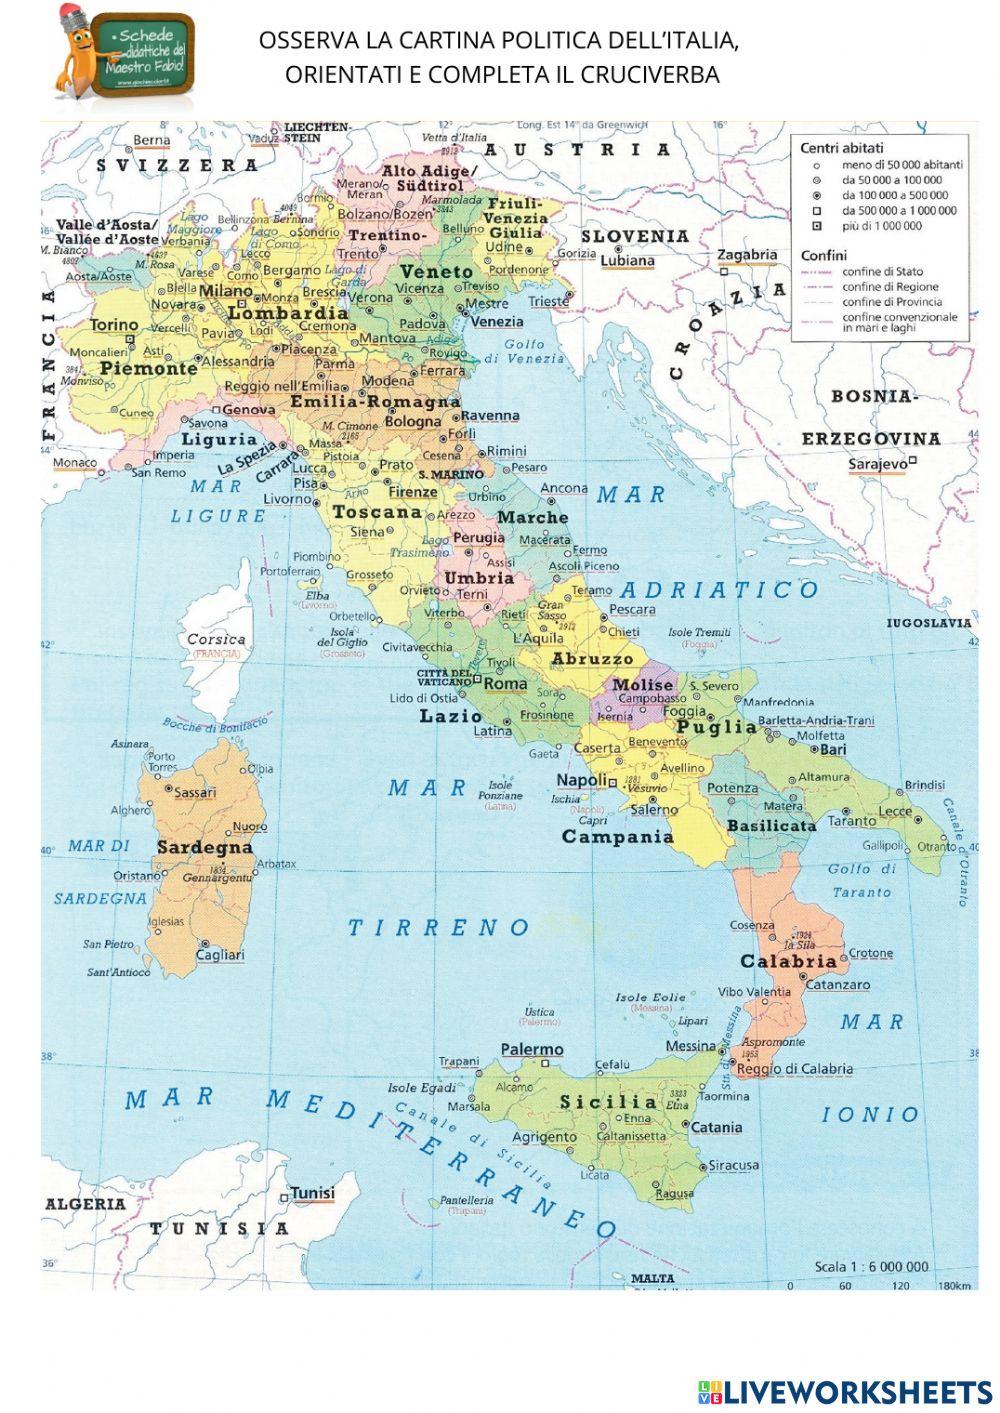 Cruciverba delle regioni italiane